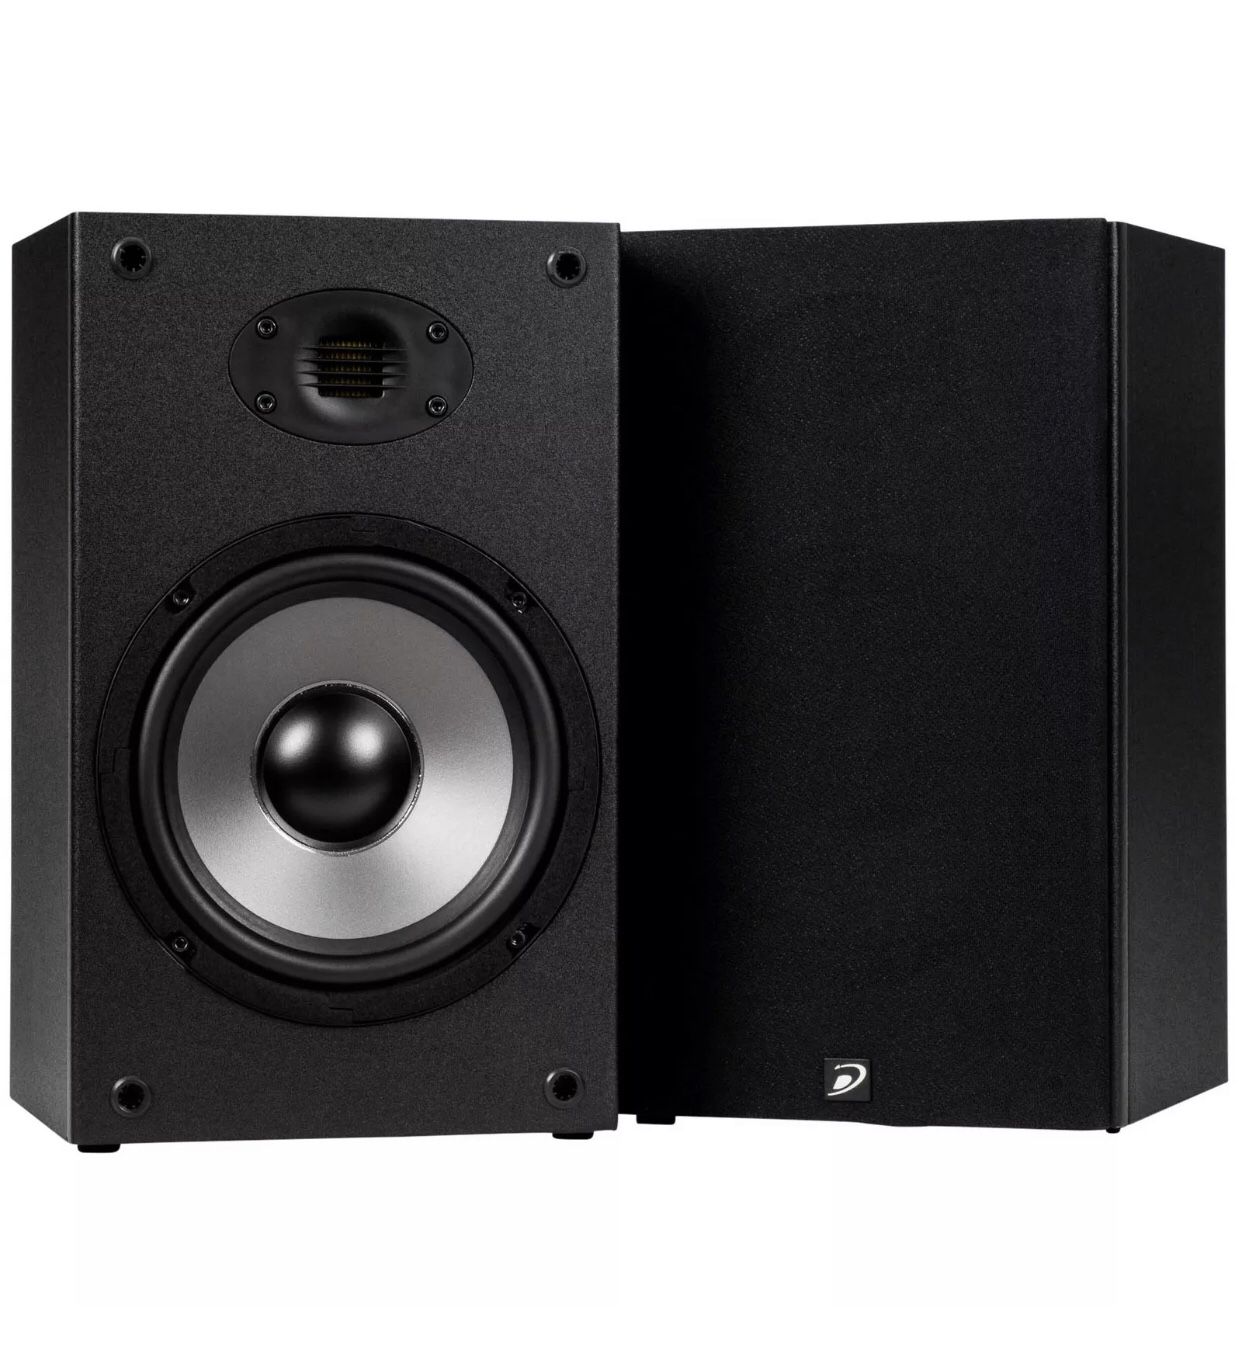 Dayton Audio B652 6-1/2" Bookshelf Speakers Audiophile Black Cabinet Great Sound (New)